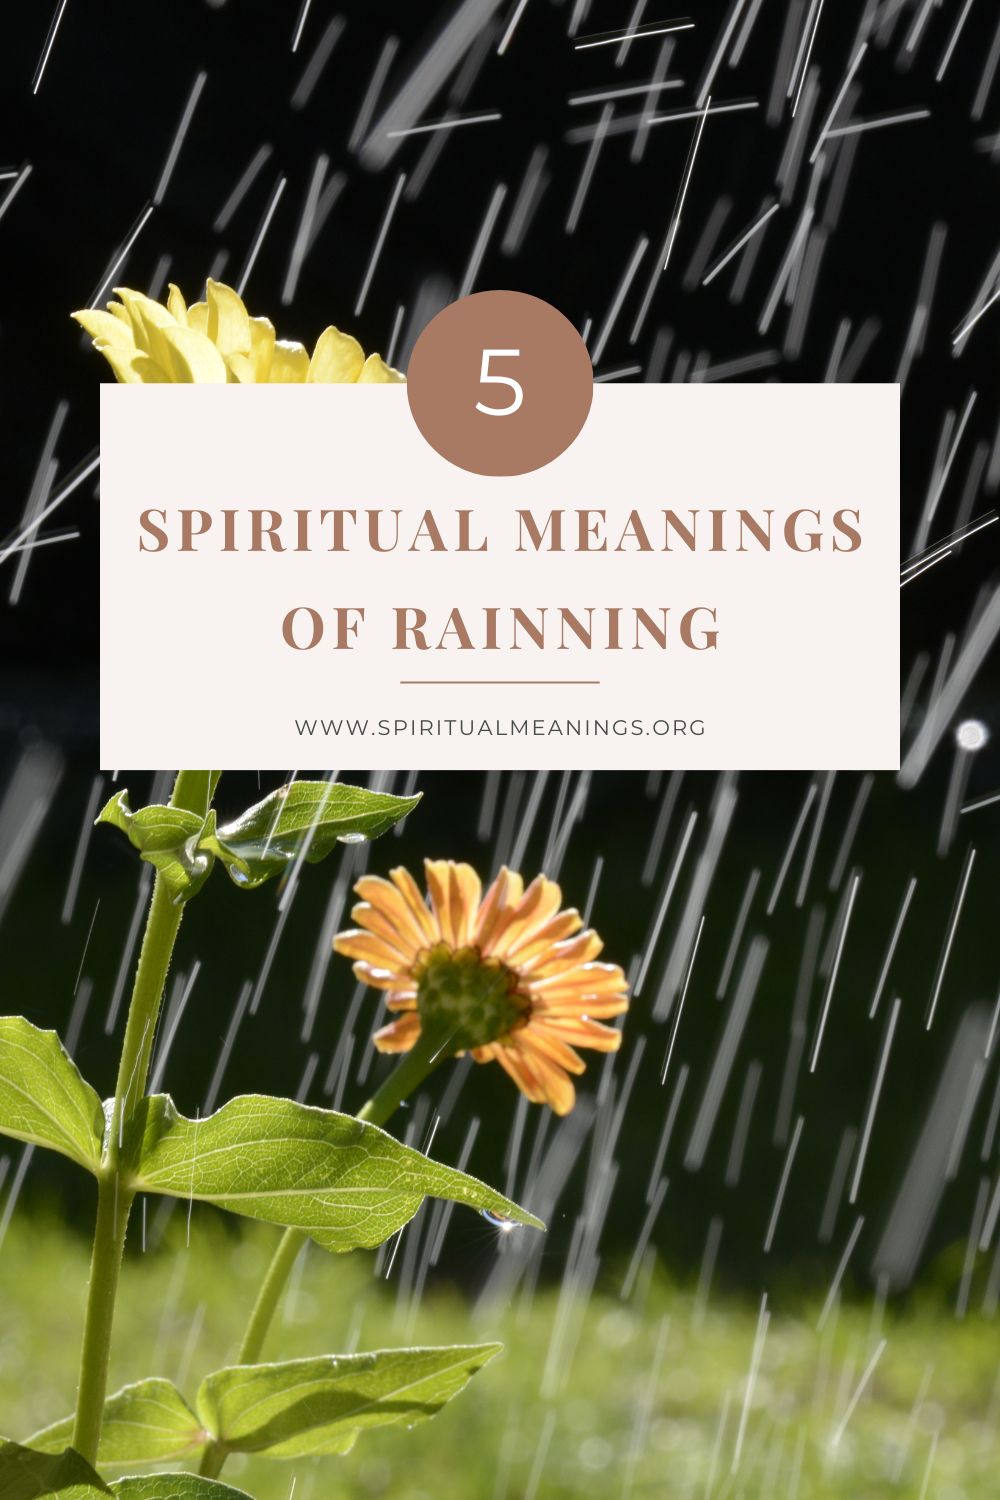 Rain Spiritual Meanings